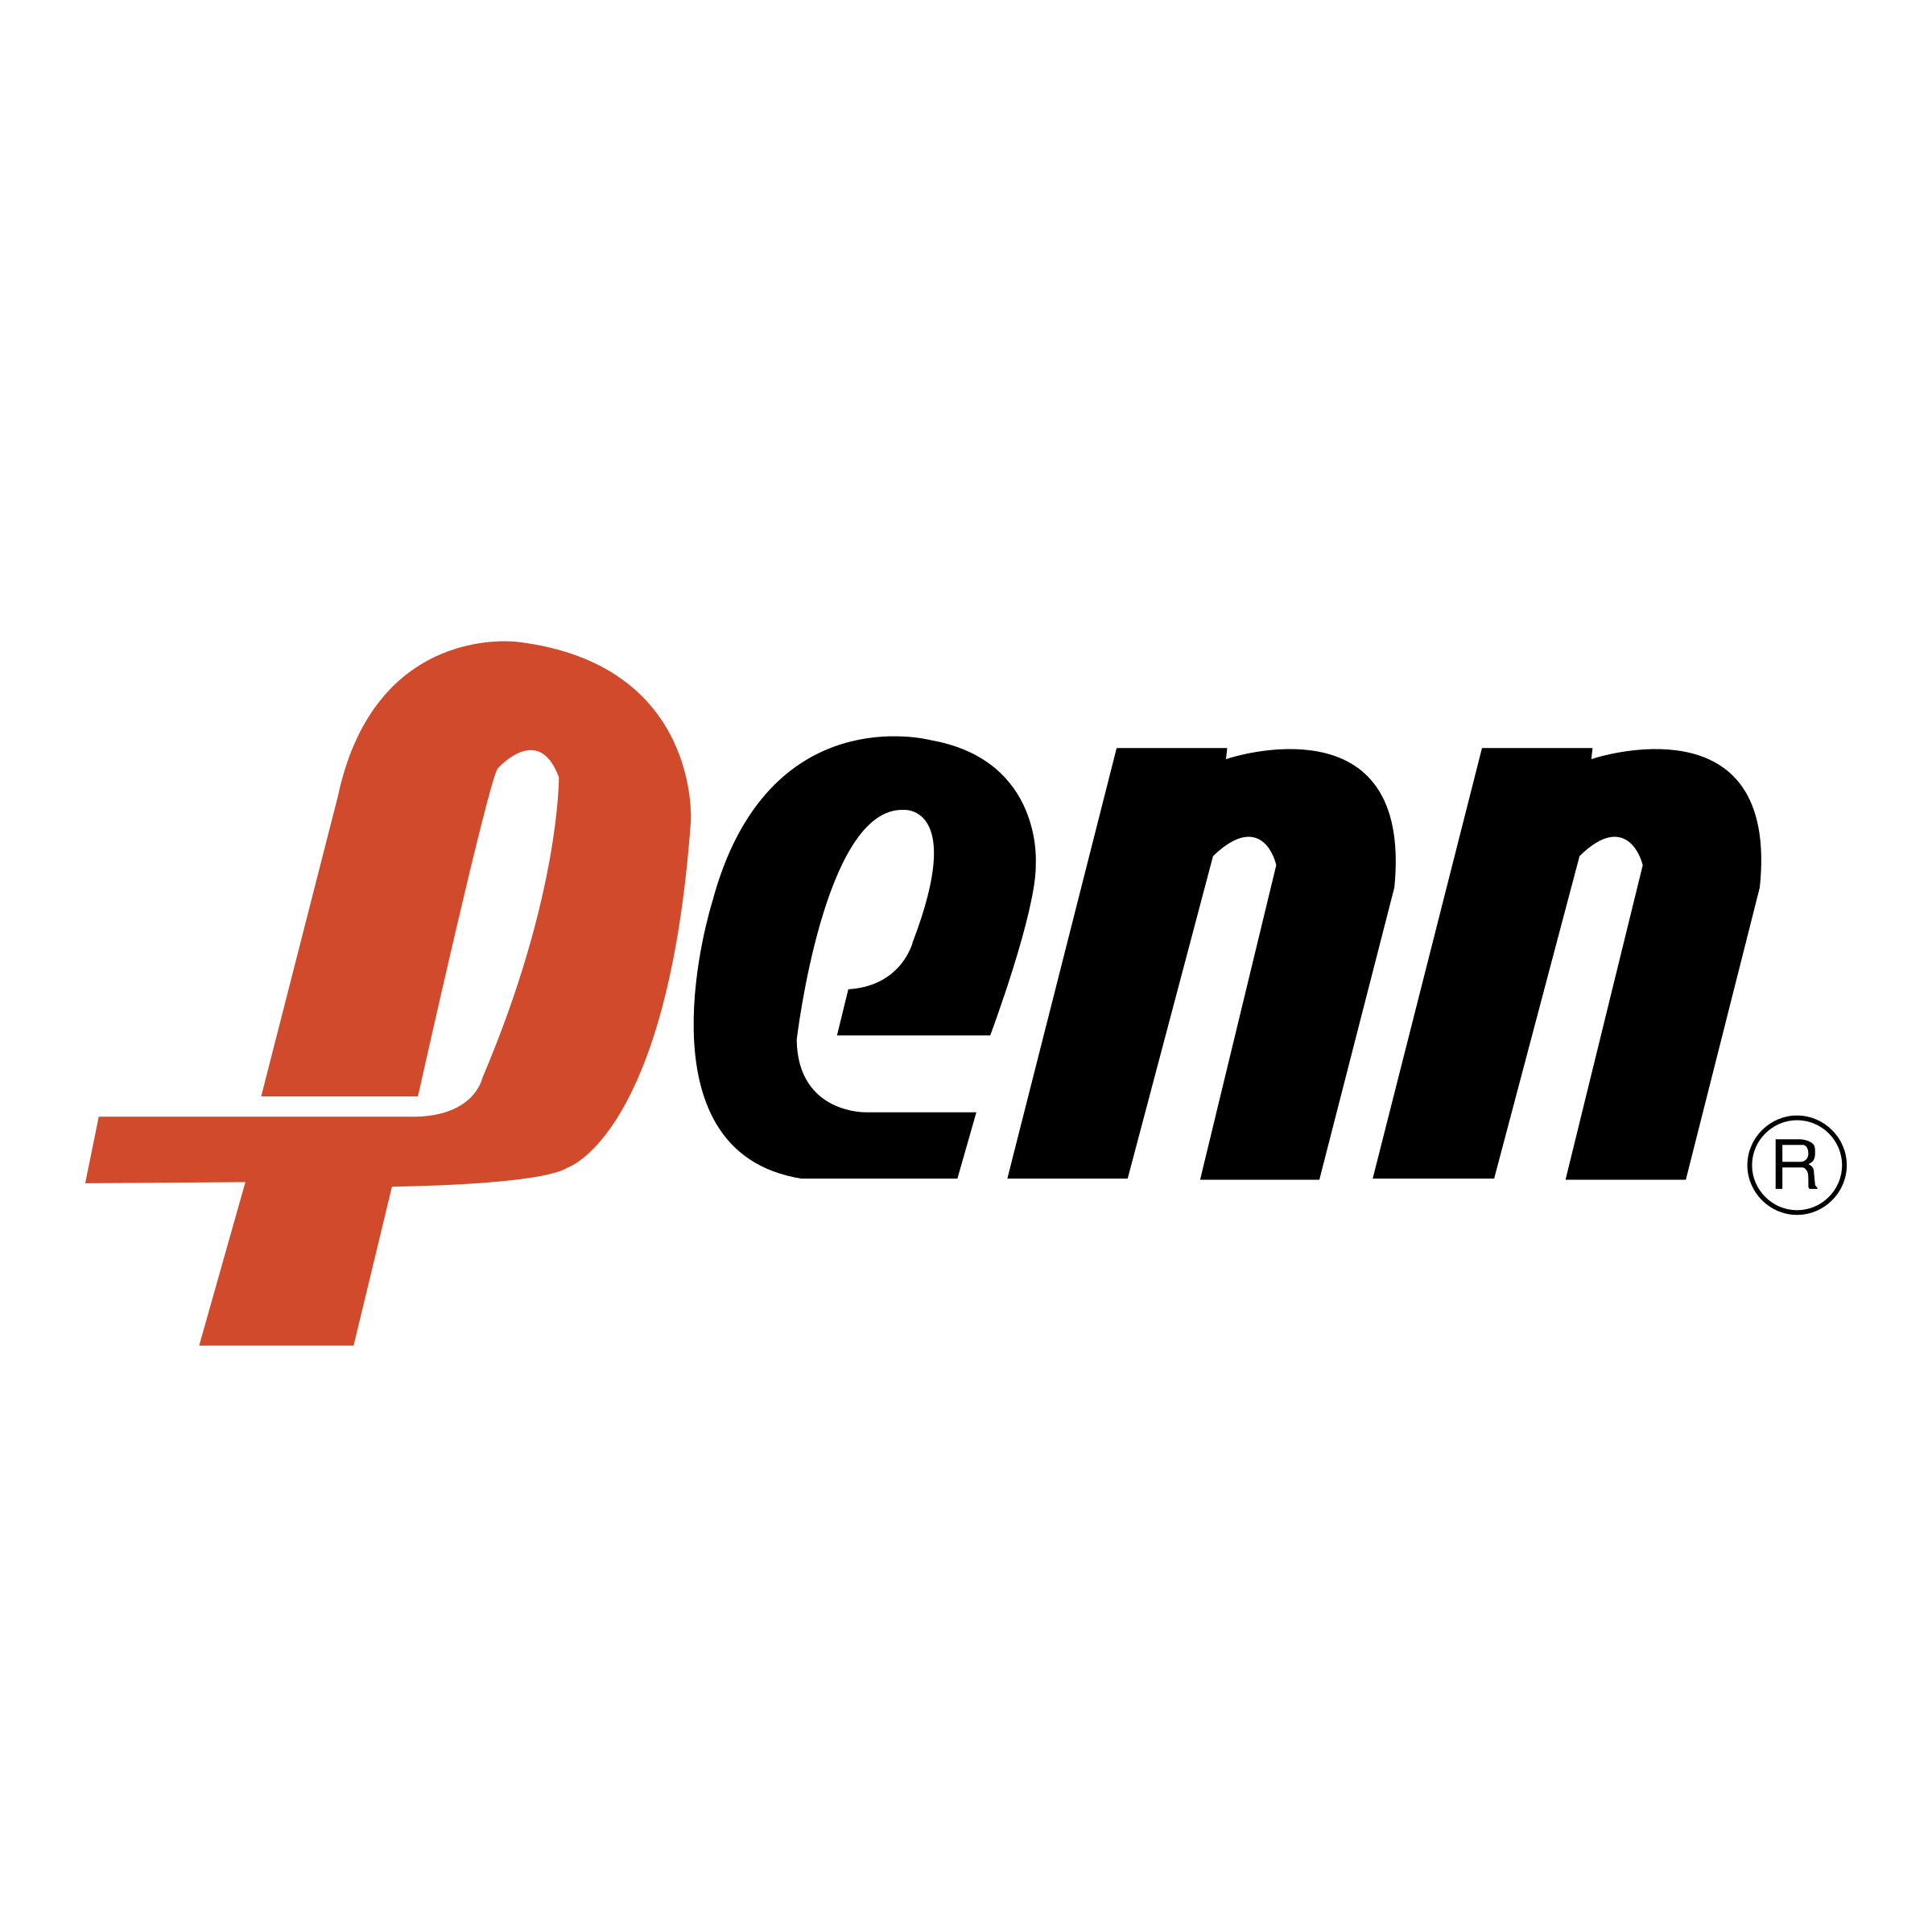 Penn Logo - Penn Logo PNG Transparent & SVG Vector - Freebie Supply